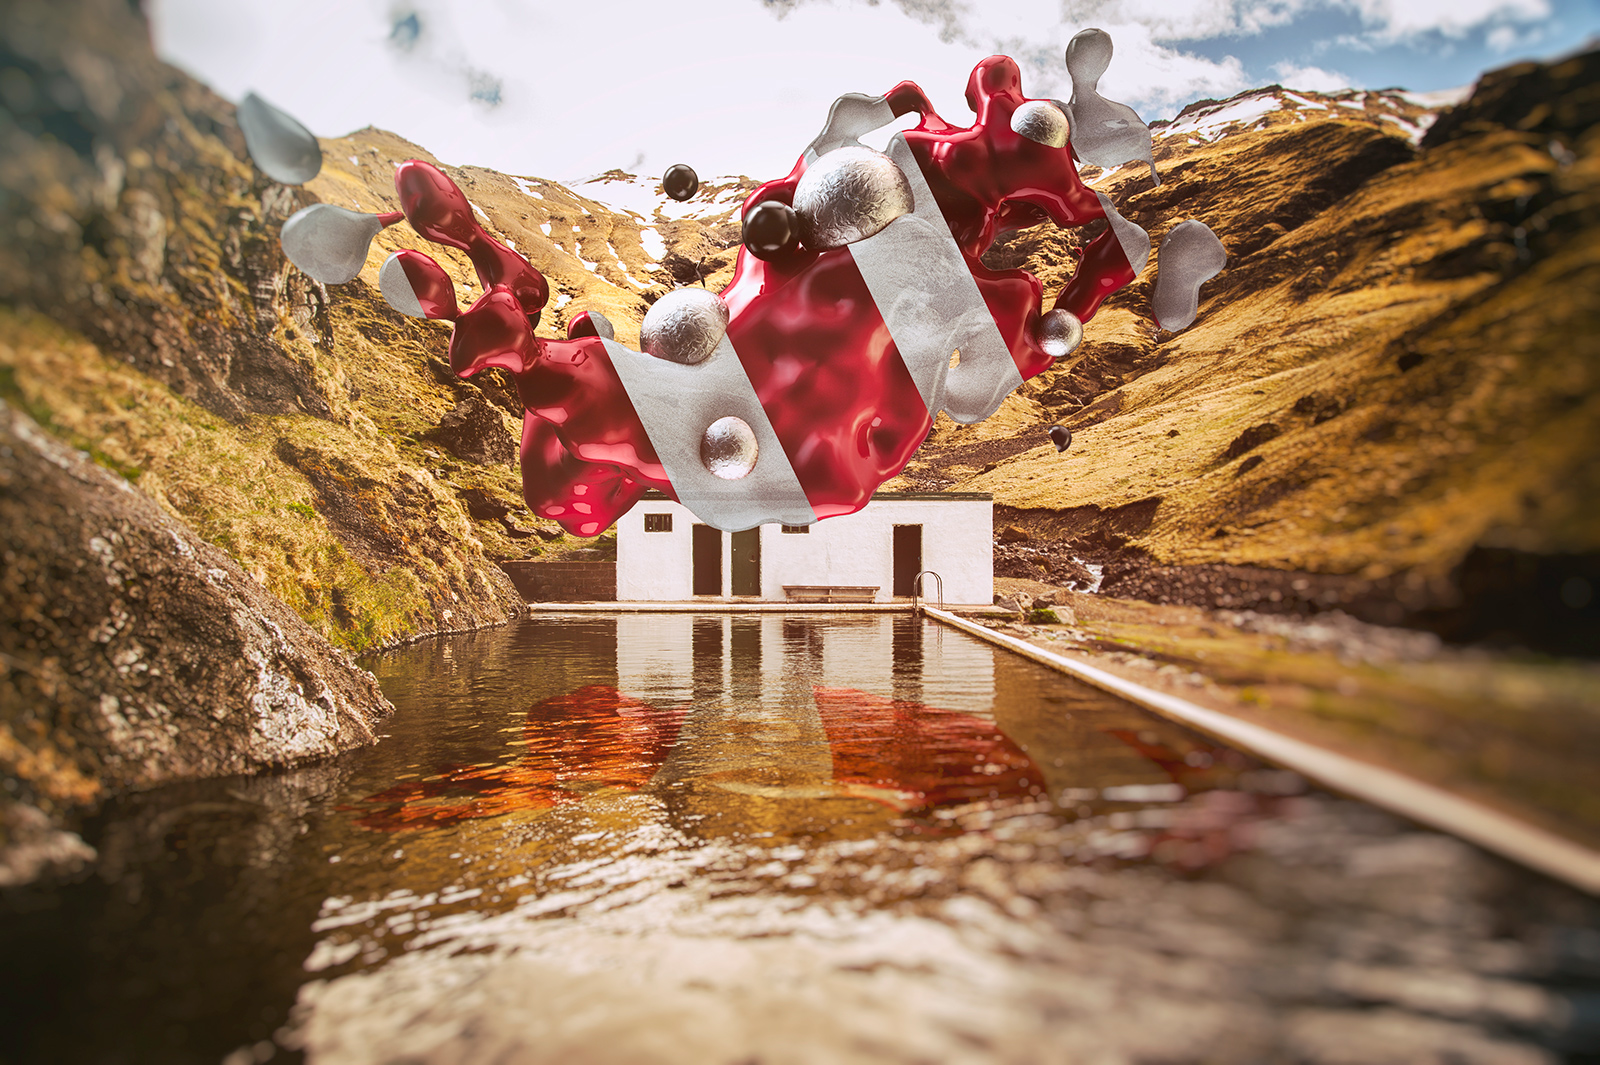 Seljavallalaugn, Iceland Hot Springs Pool, Iceland, Mountain Pool, Abstract Art, Digital Art, Lost in Iceland, Cinema 4D, C4D, 3D Render, CGI, Scifi, Iceland, landscape, Nikon D700, 52 Renders